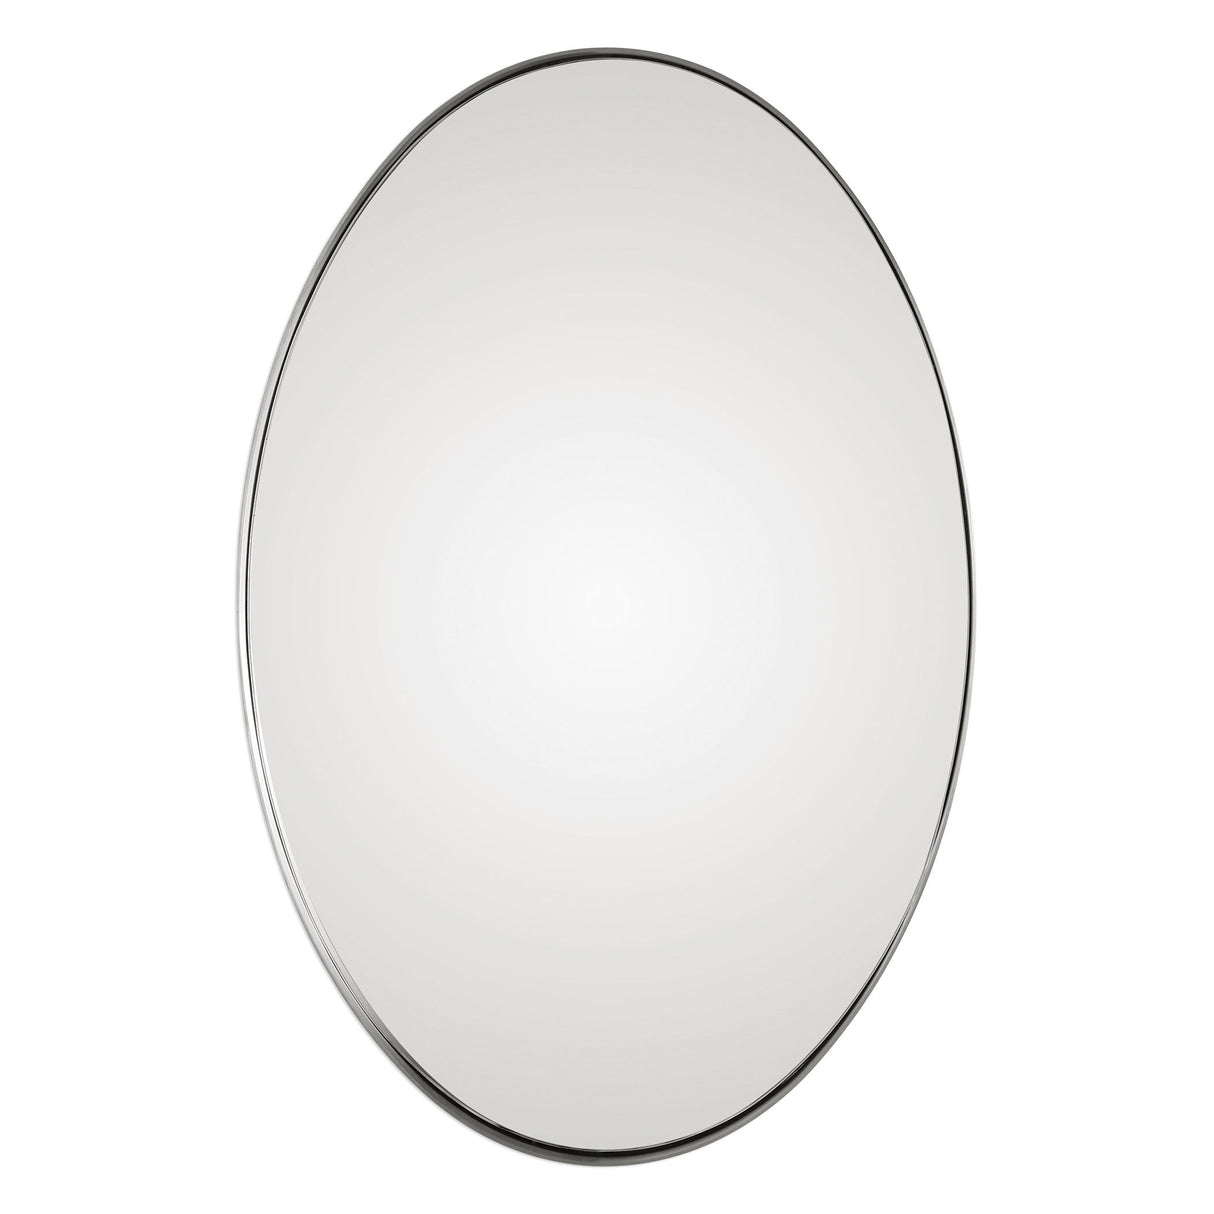 Pursley - Oval Mirror - Brushed Nickel